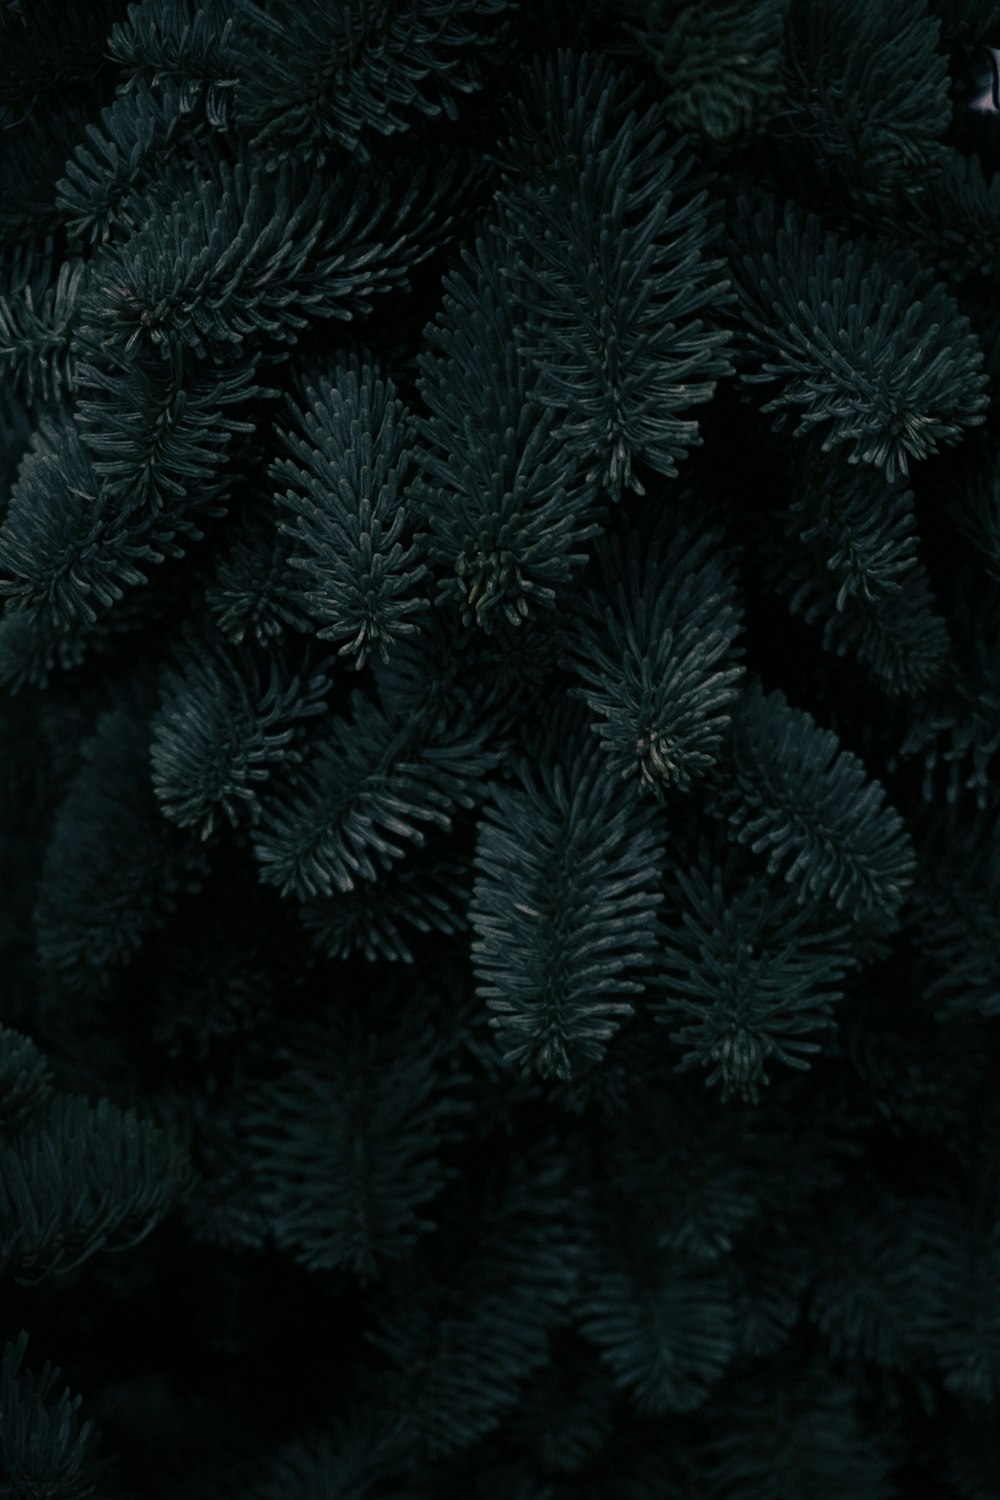 a close up of a black pine tree